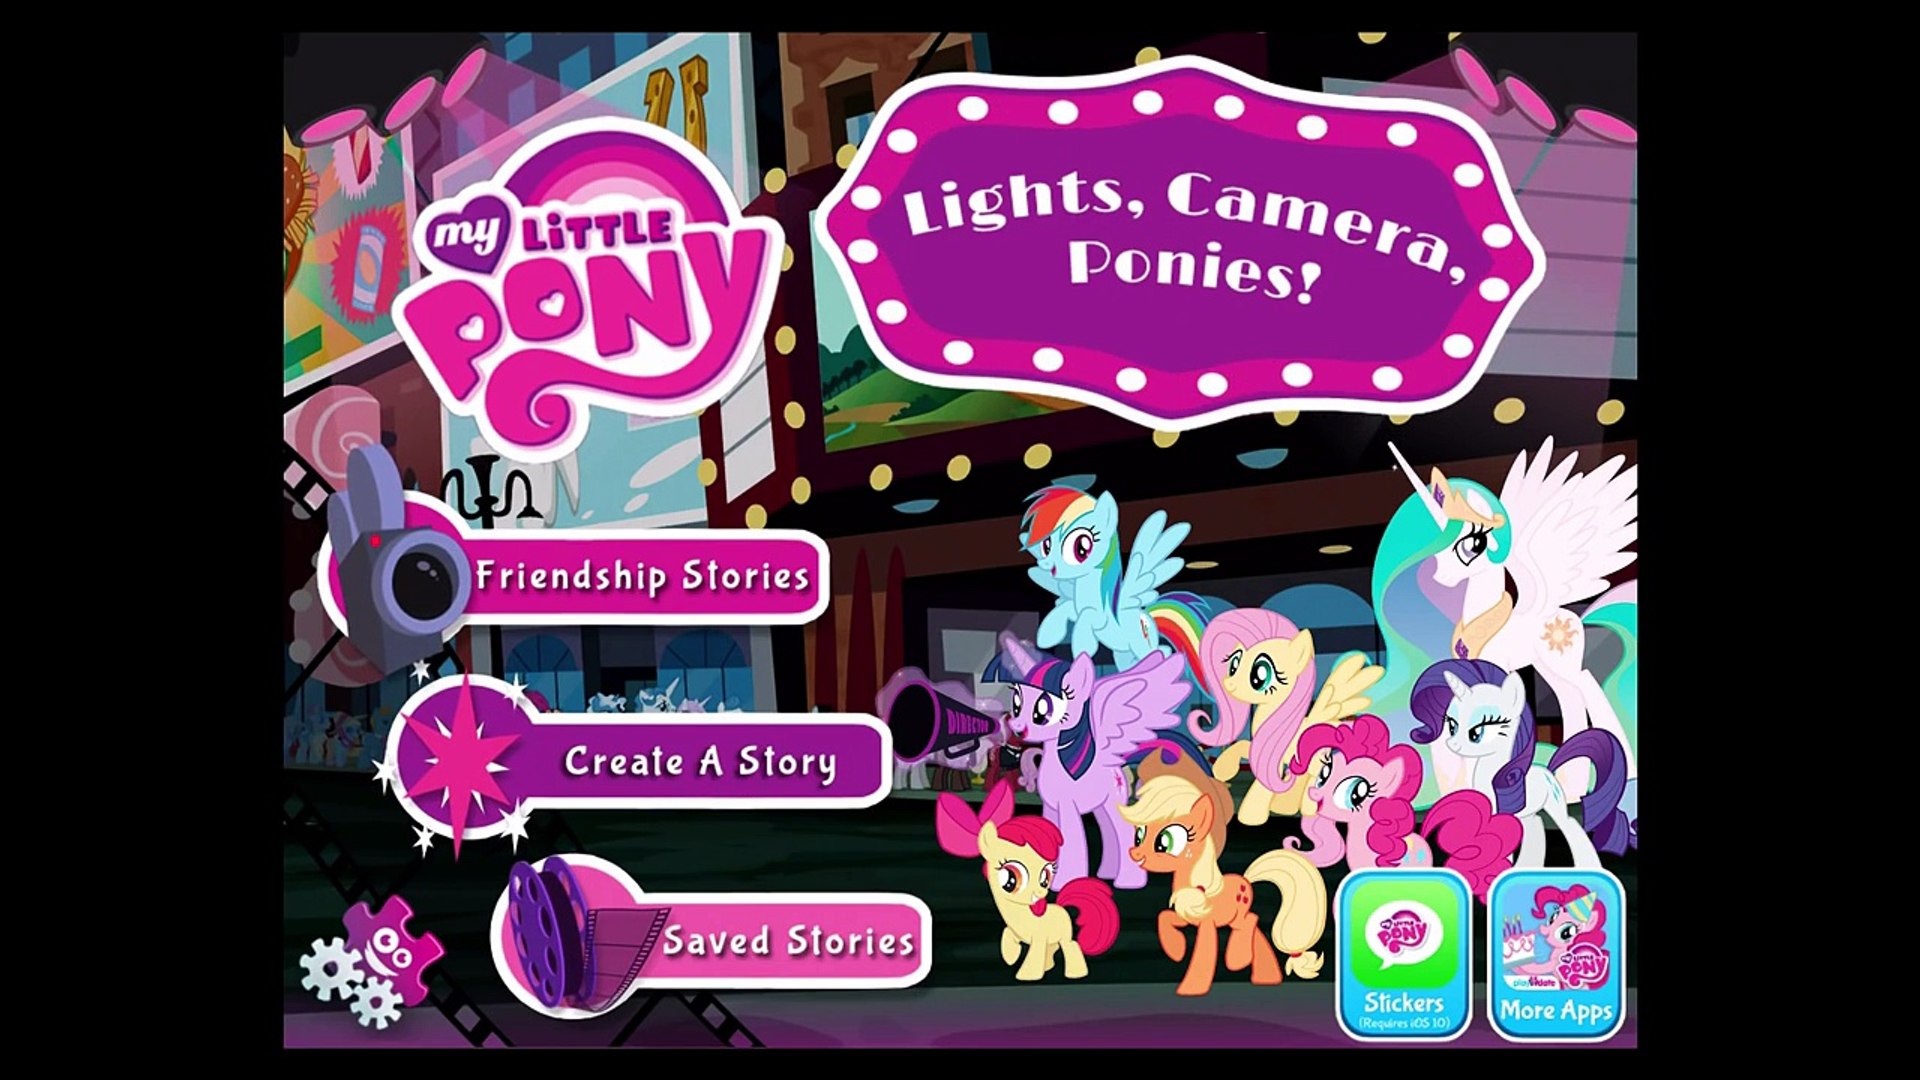 My Little Pony: Lights, Camera, Ponies! - iOS - Twilight Story